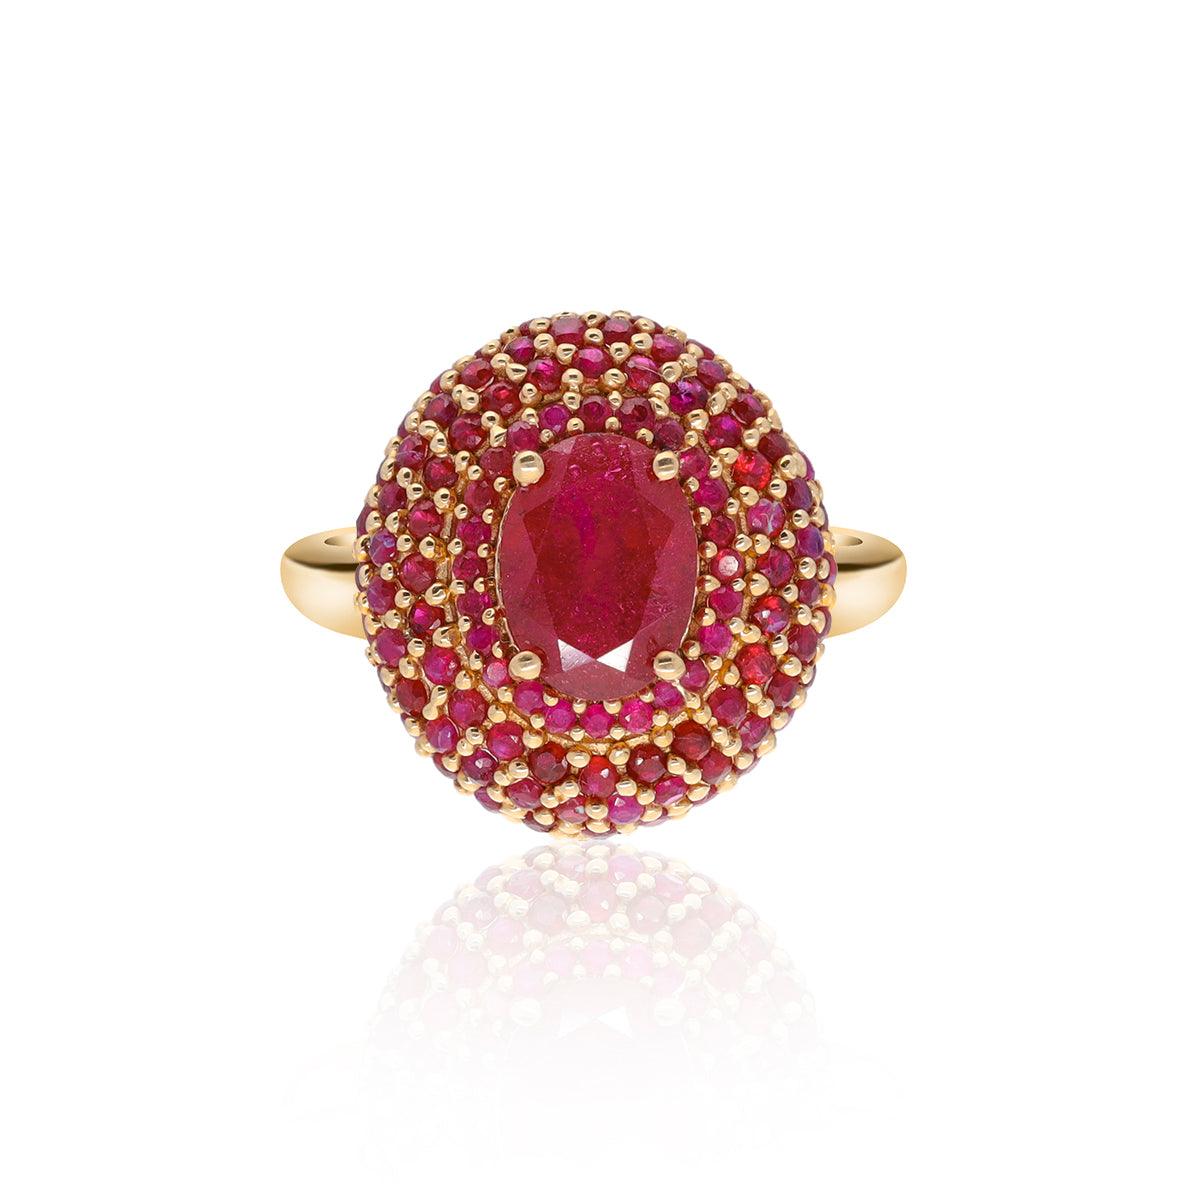 2.29 Ct. Glass Filled Ruby Chunky Ring 14K Yellow Gold Jewelry - YoTreasure